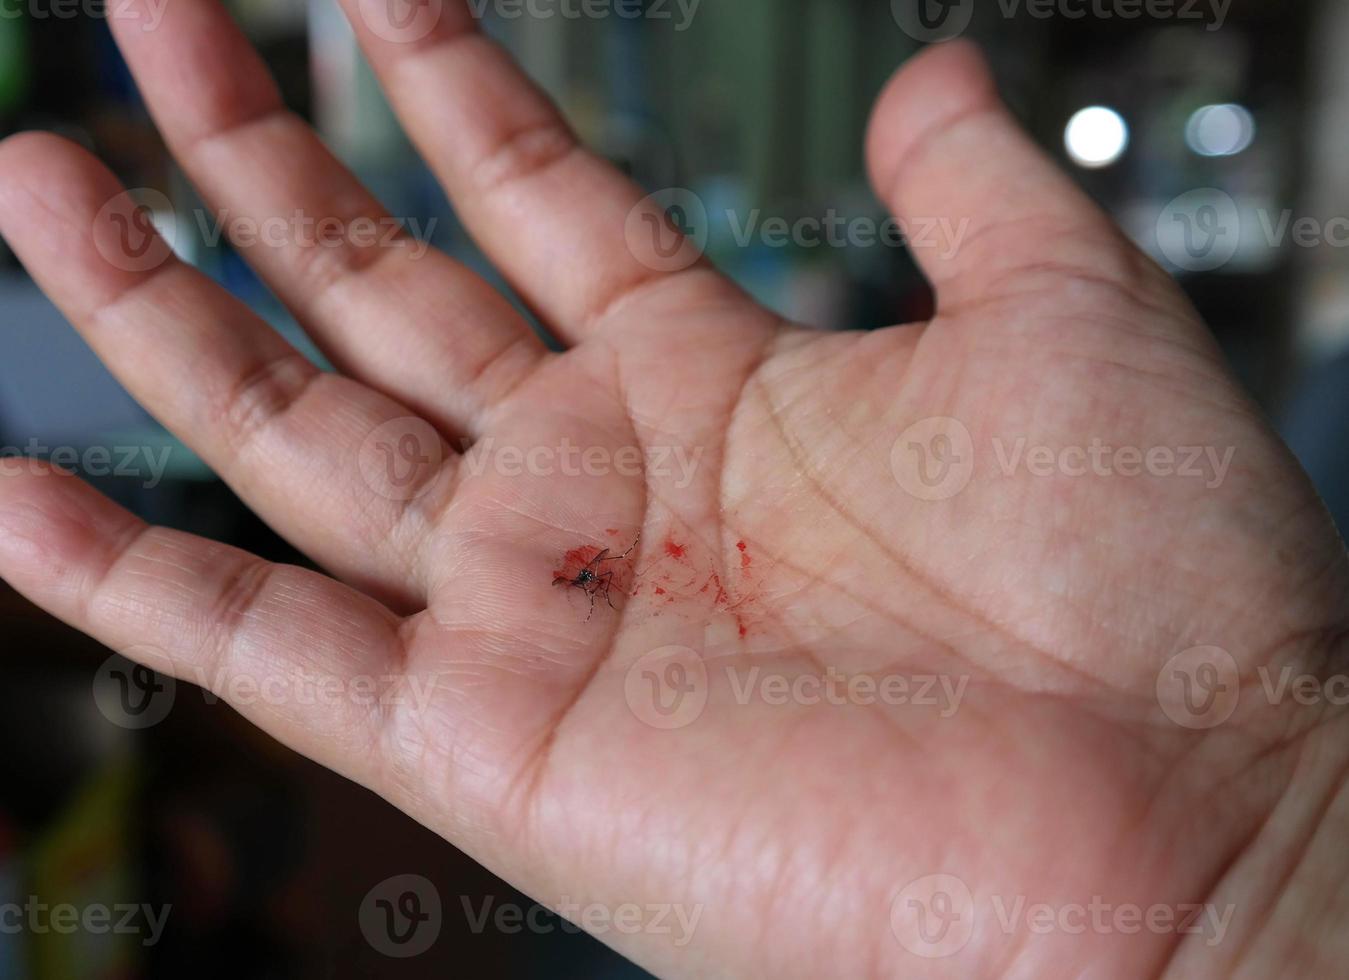 mosquito muerto con sangre roja en la palma humana foto